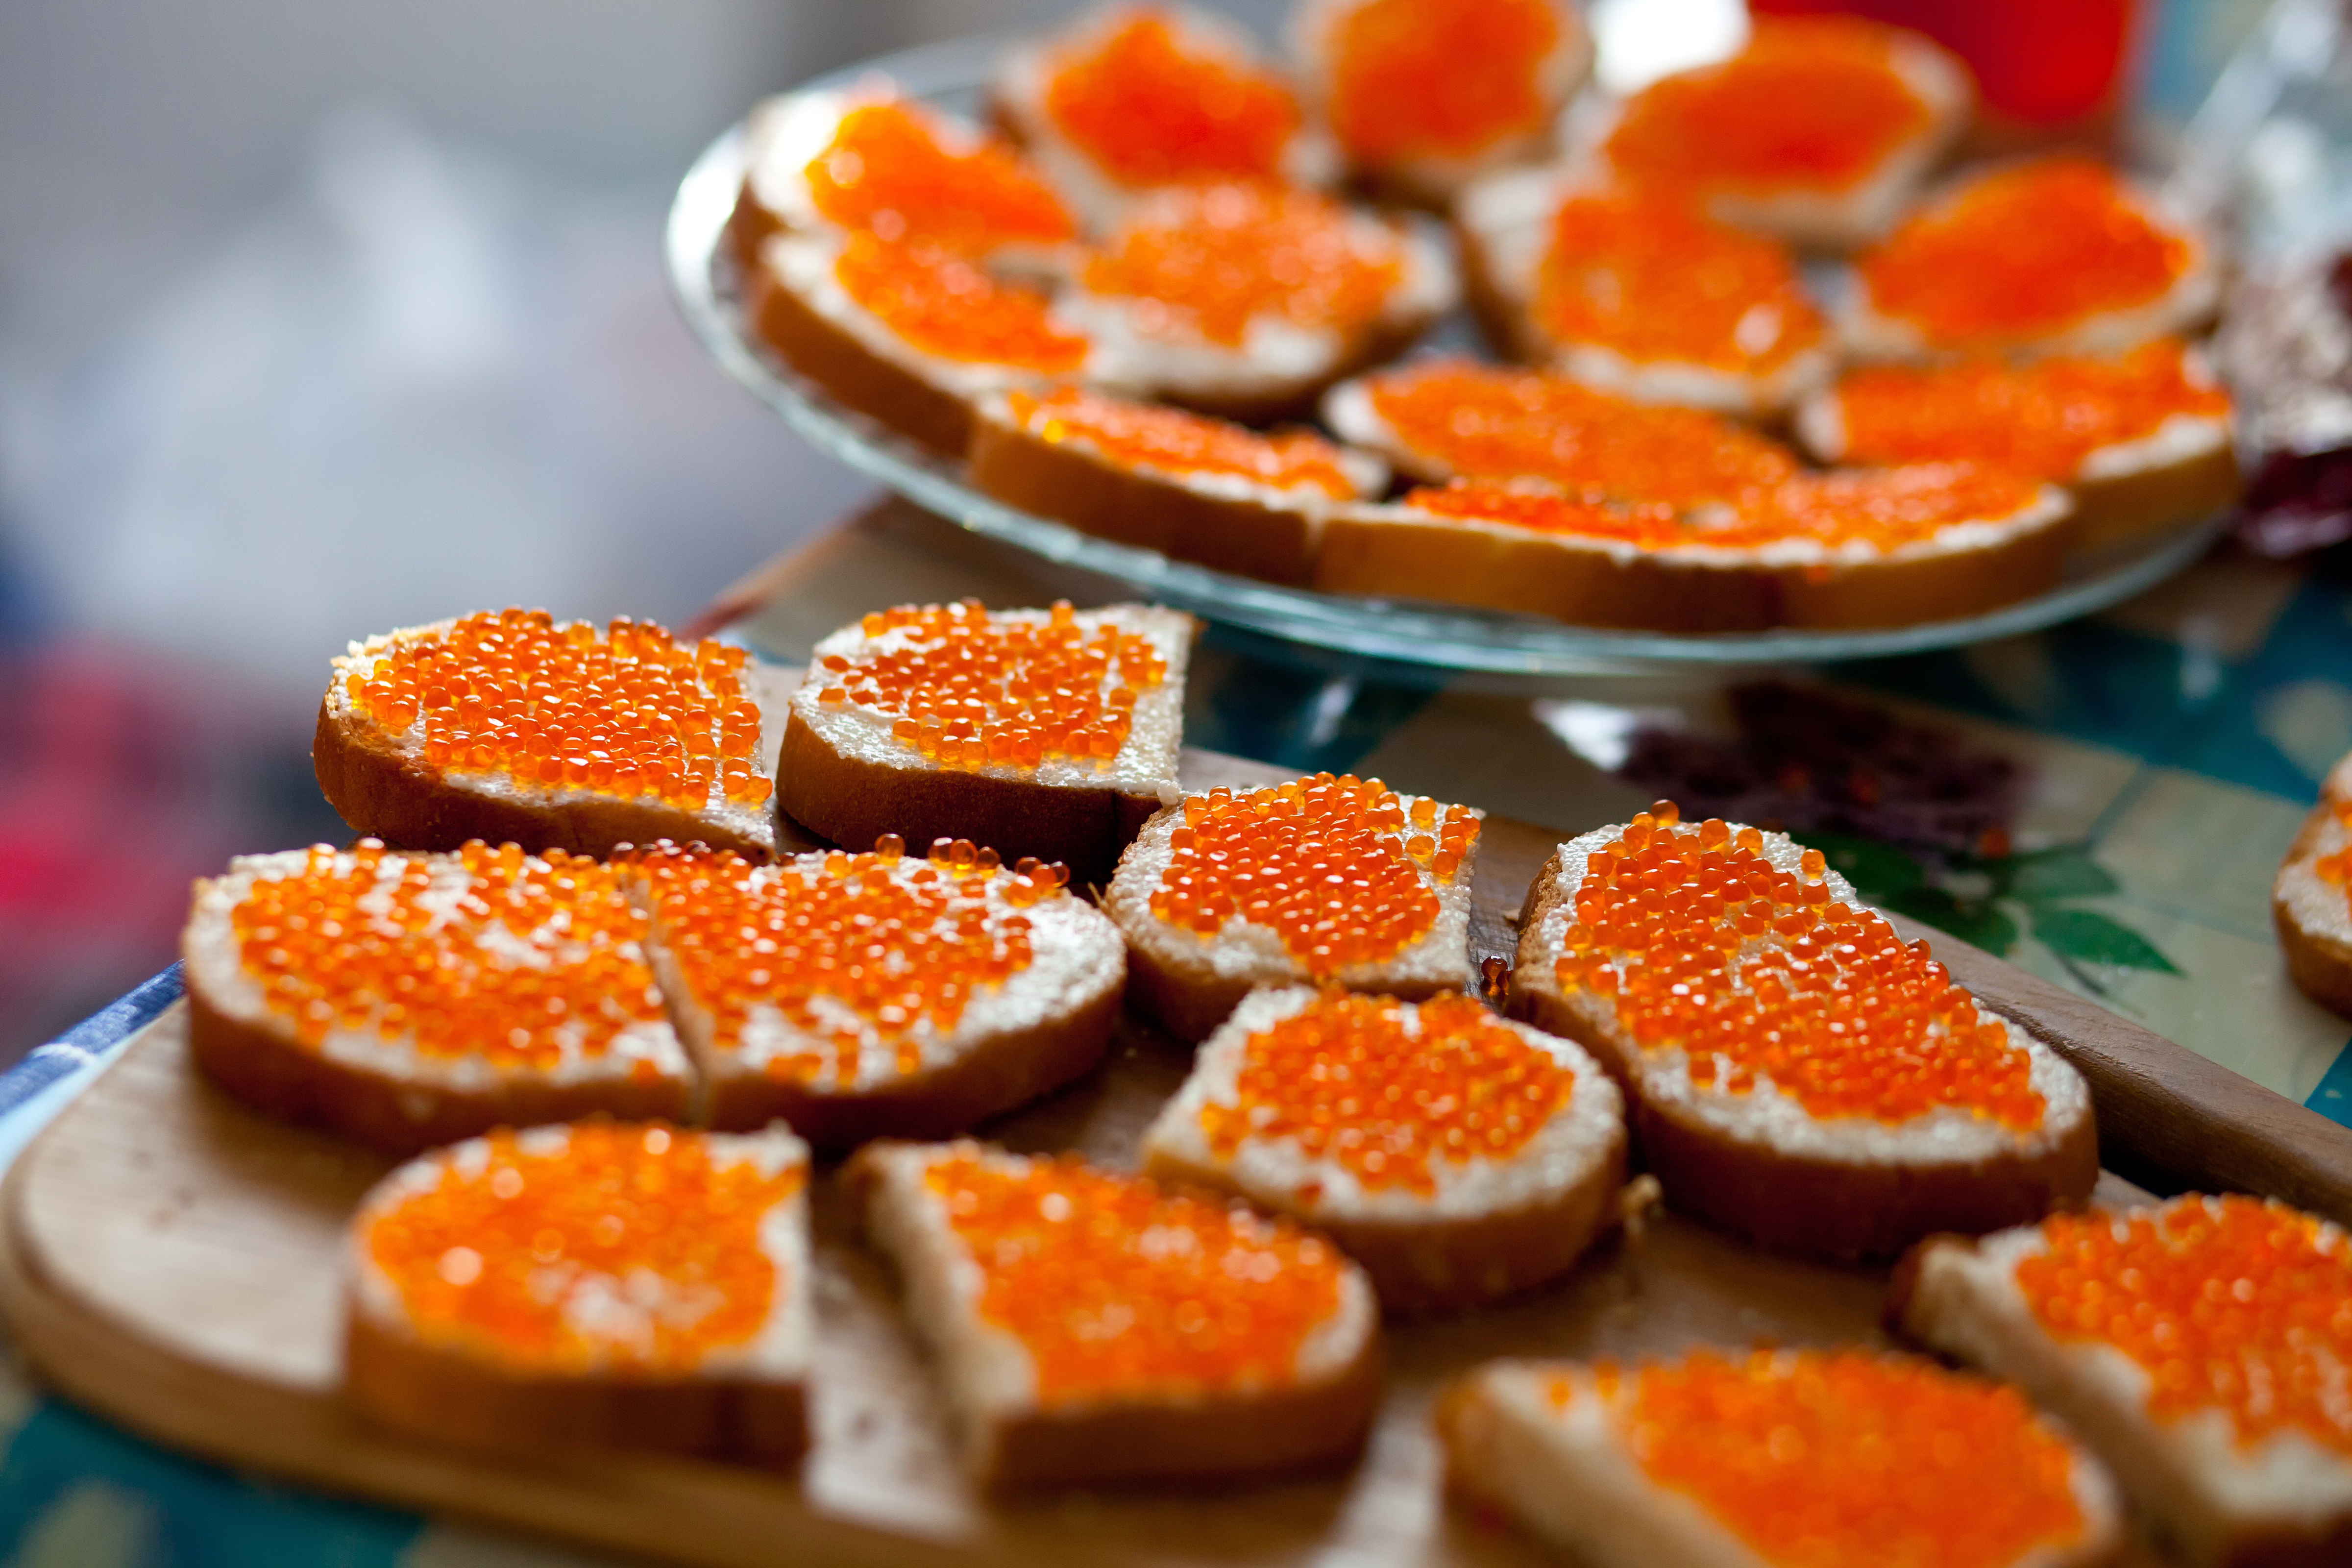 Butterbrot_Bread_Seafoods_Caviar_536192_4800x3200.jpg